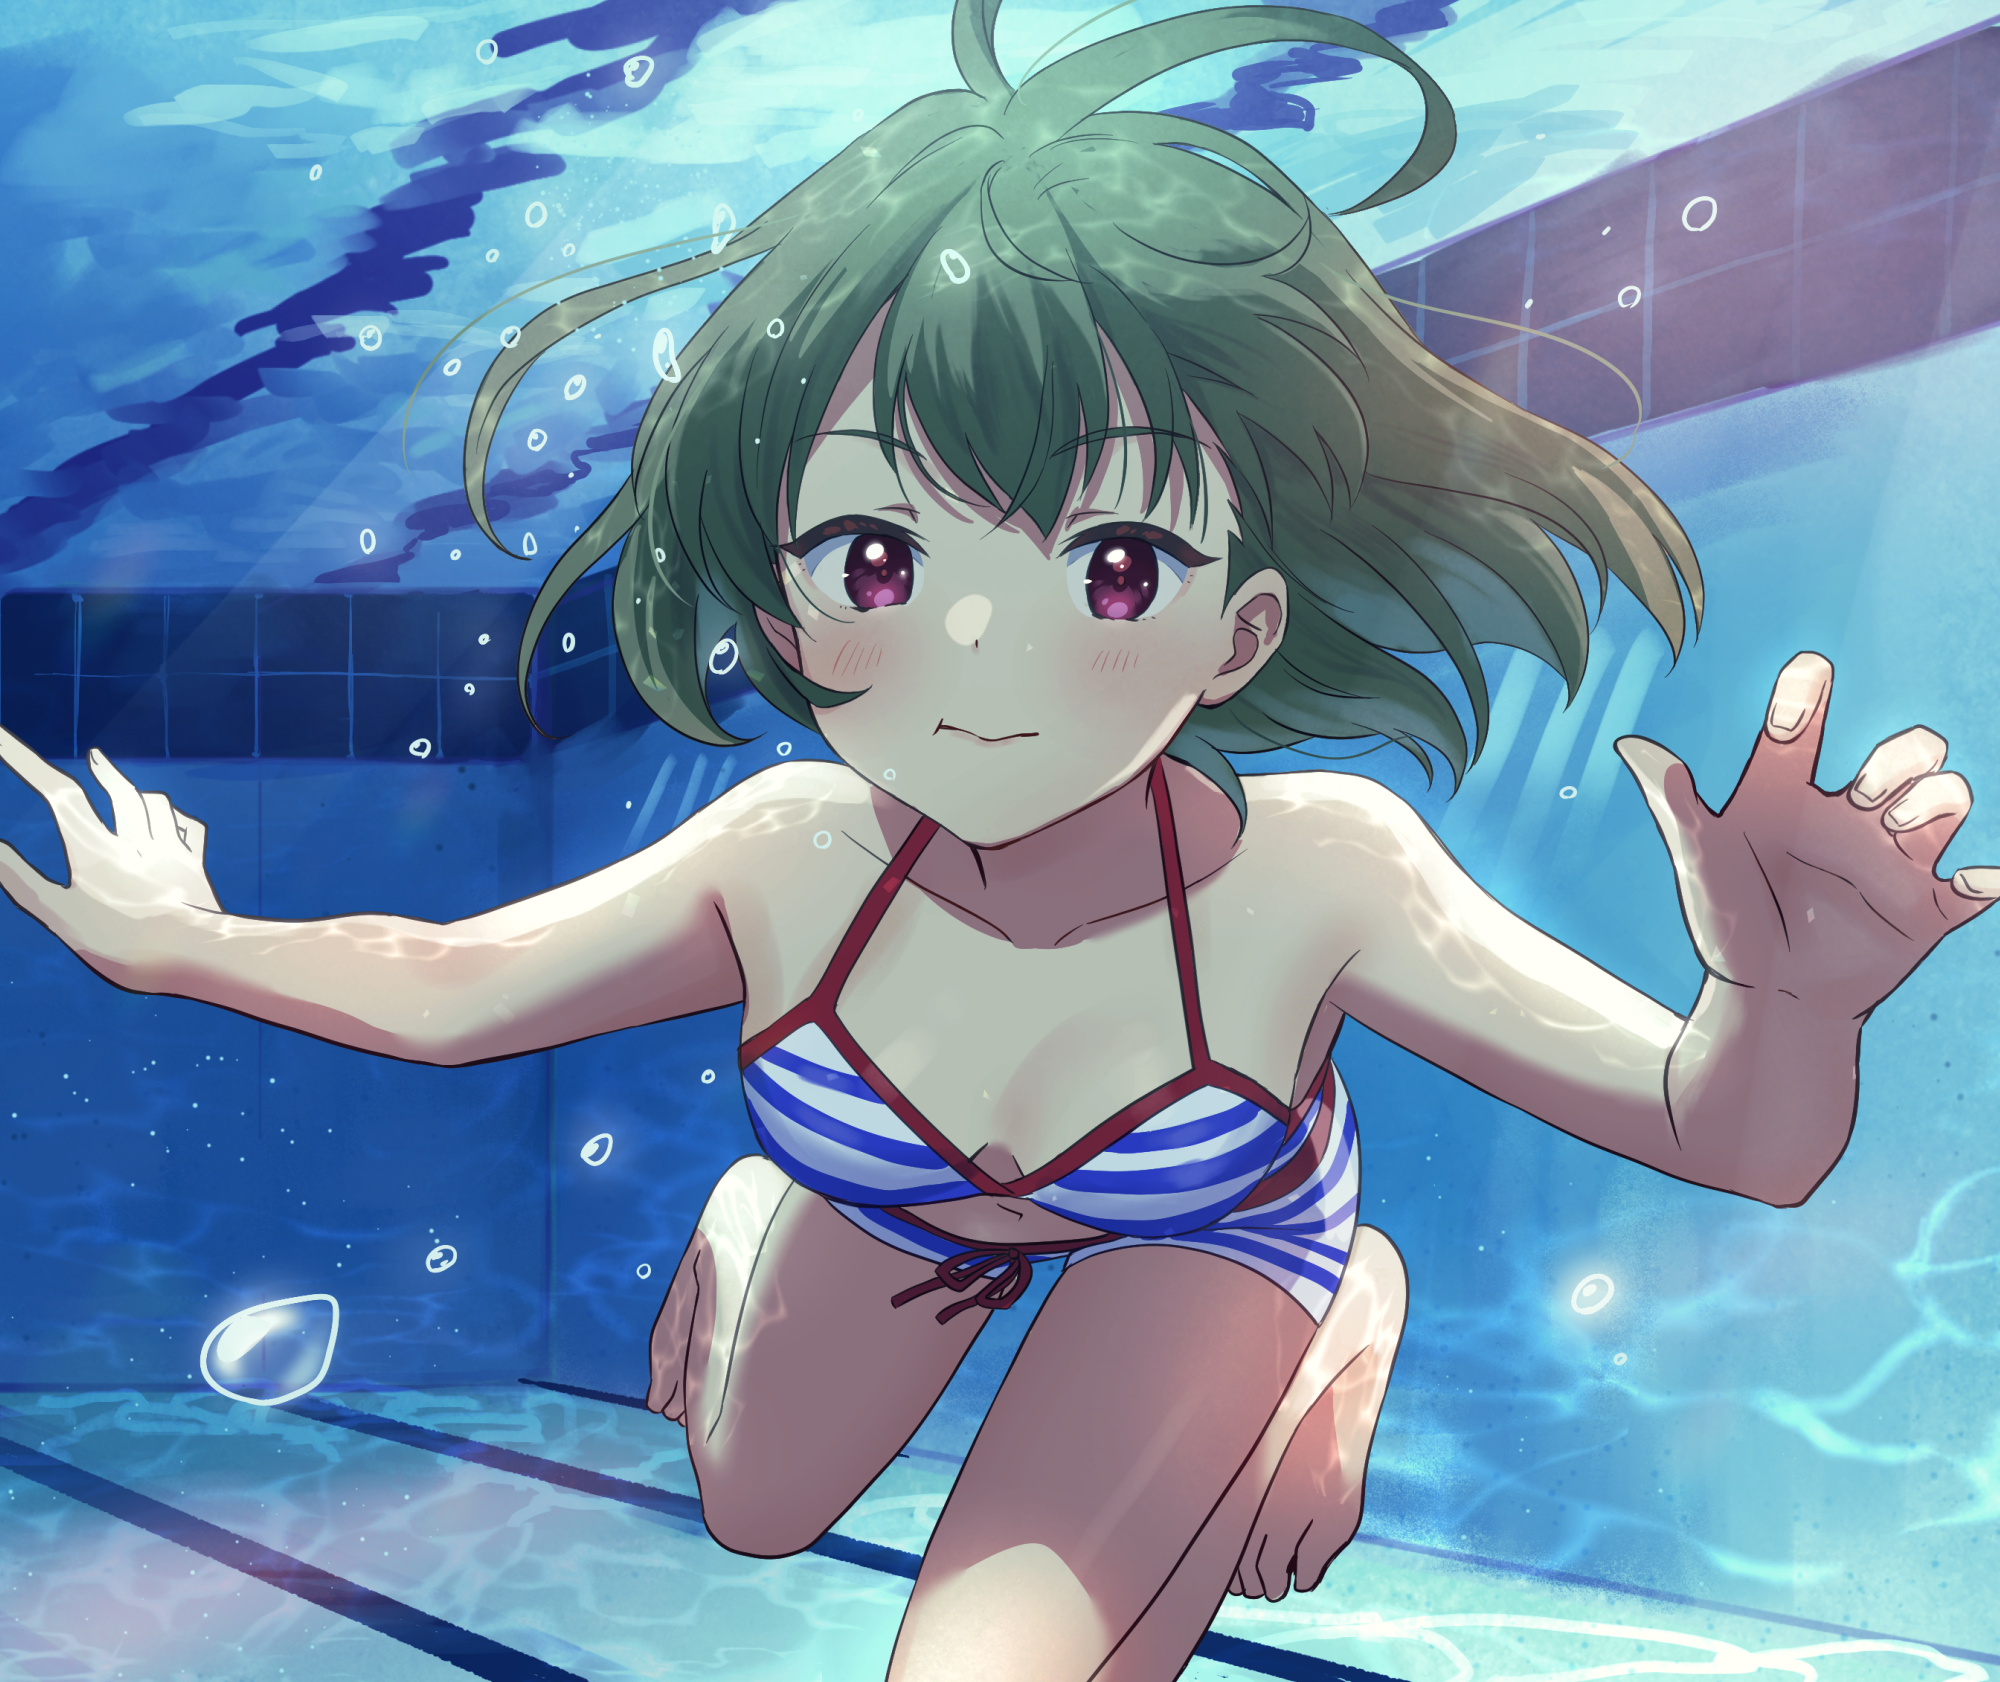 Anime 2000x1682 anime anime girls digital art artwork 2D portrait Emu THE iDOLM@STER Nagayoshi Subaru underwater bikini green hair purple eyes barefoot